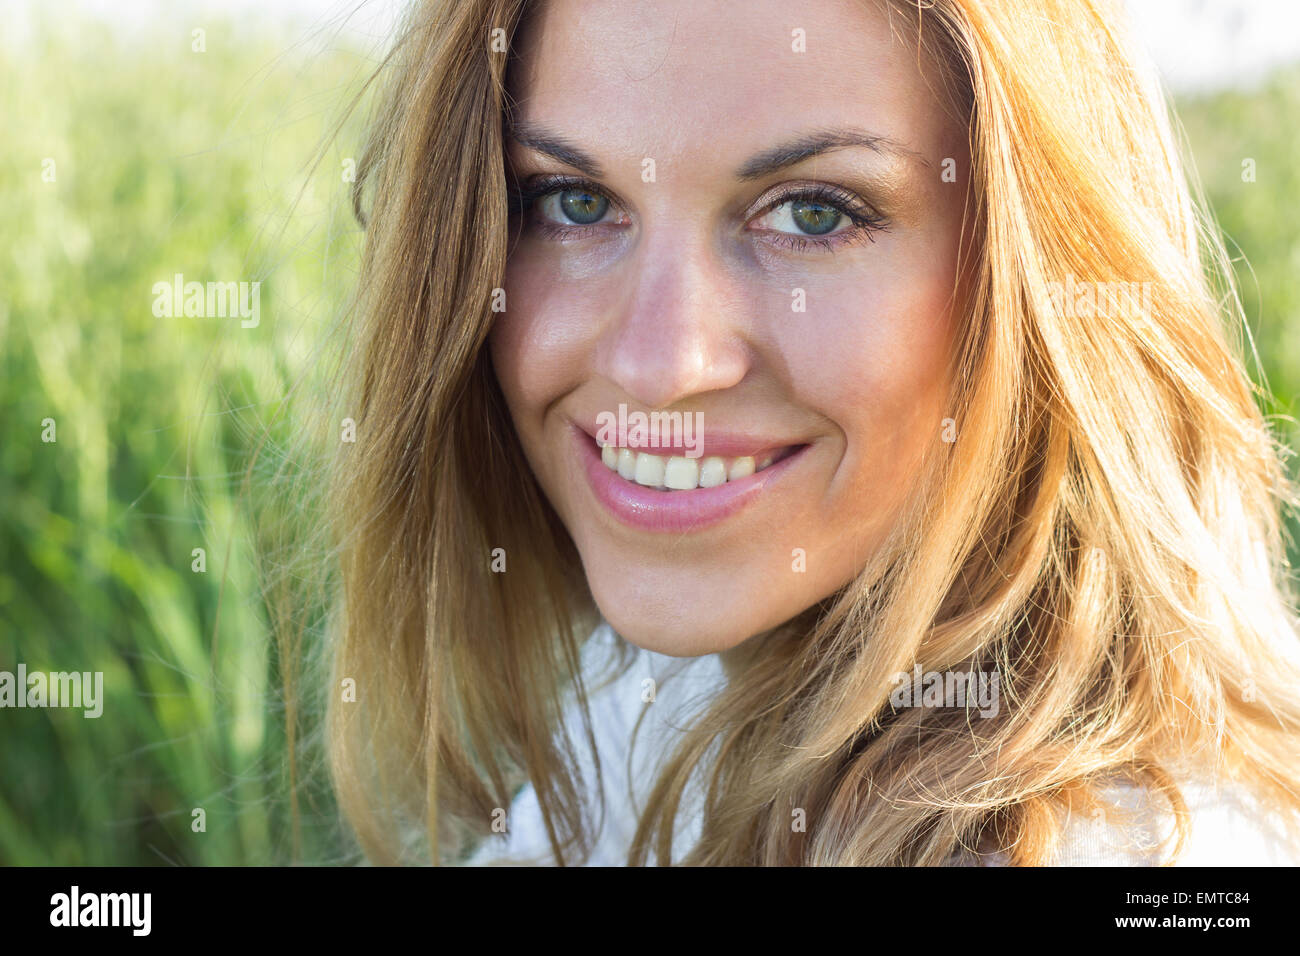 young blond woman girl face portrait outdoors green grass field sunny sunlight summer Stock Photo